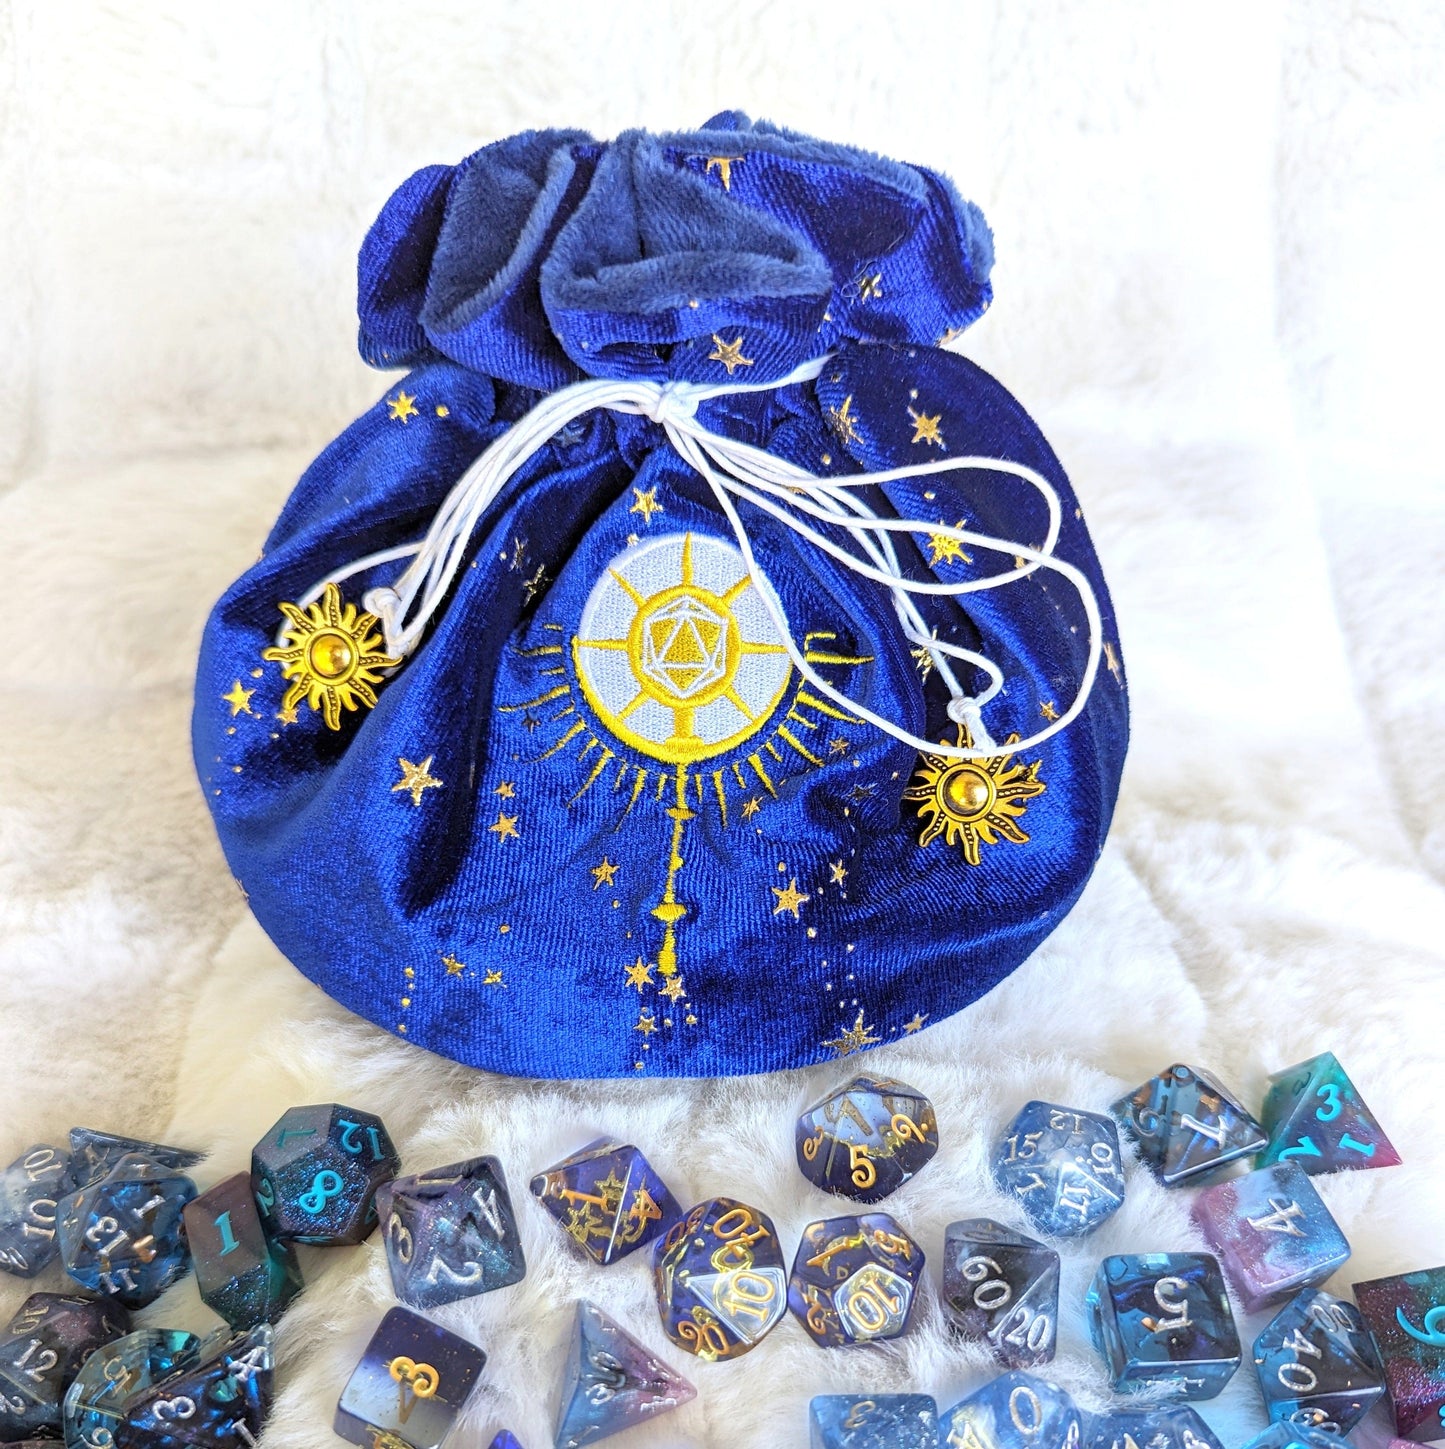 Cleric dice bag. Multi pocket large dice bag in starry blue